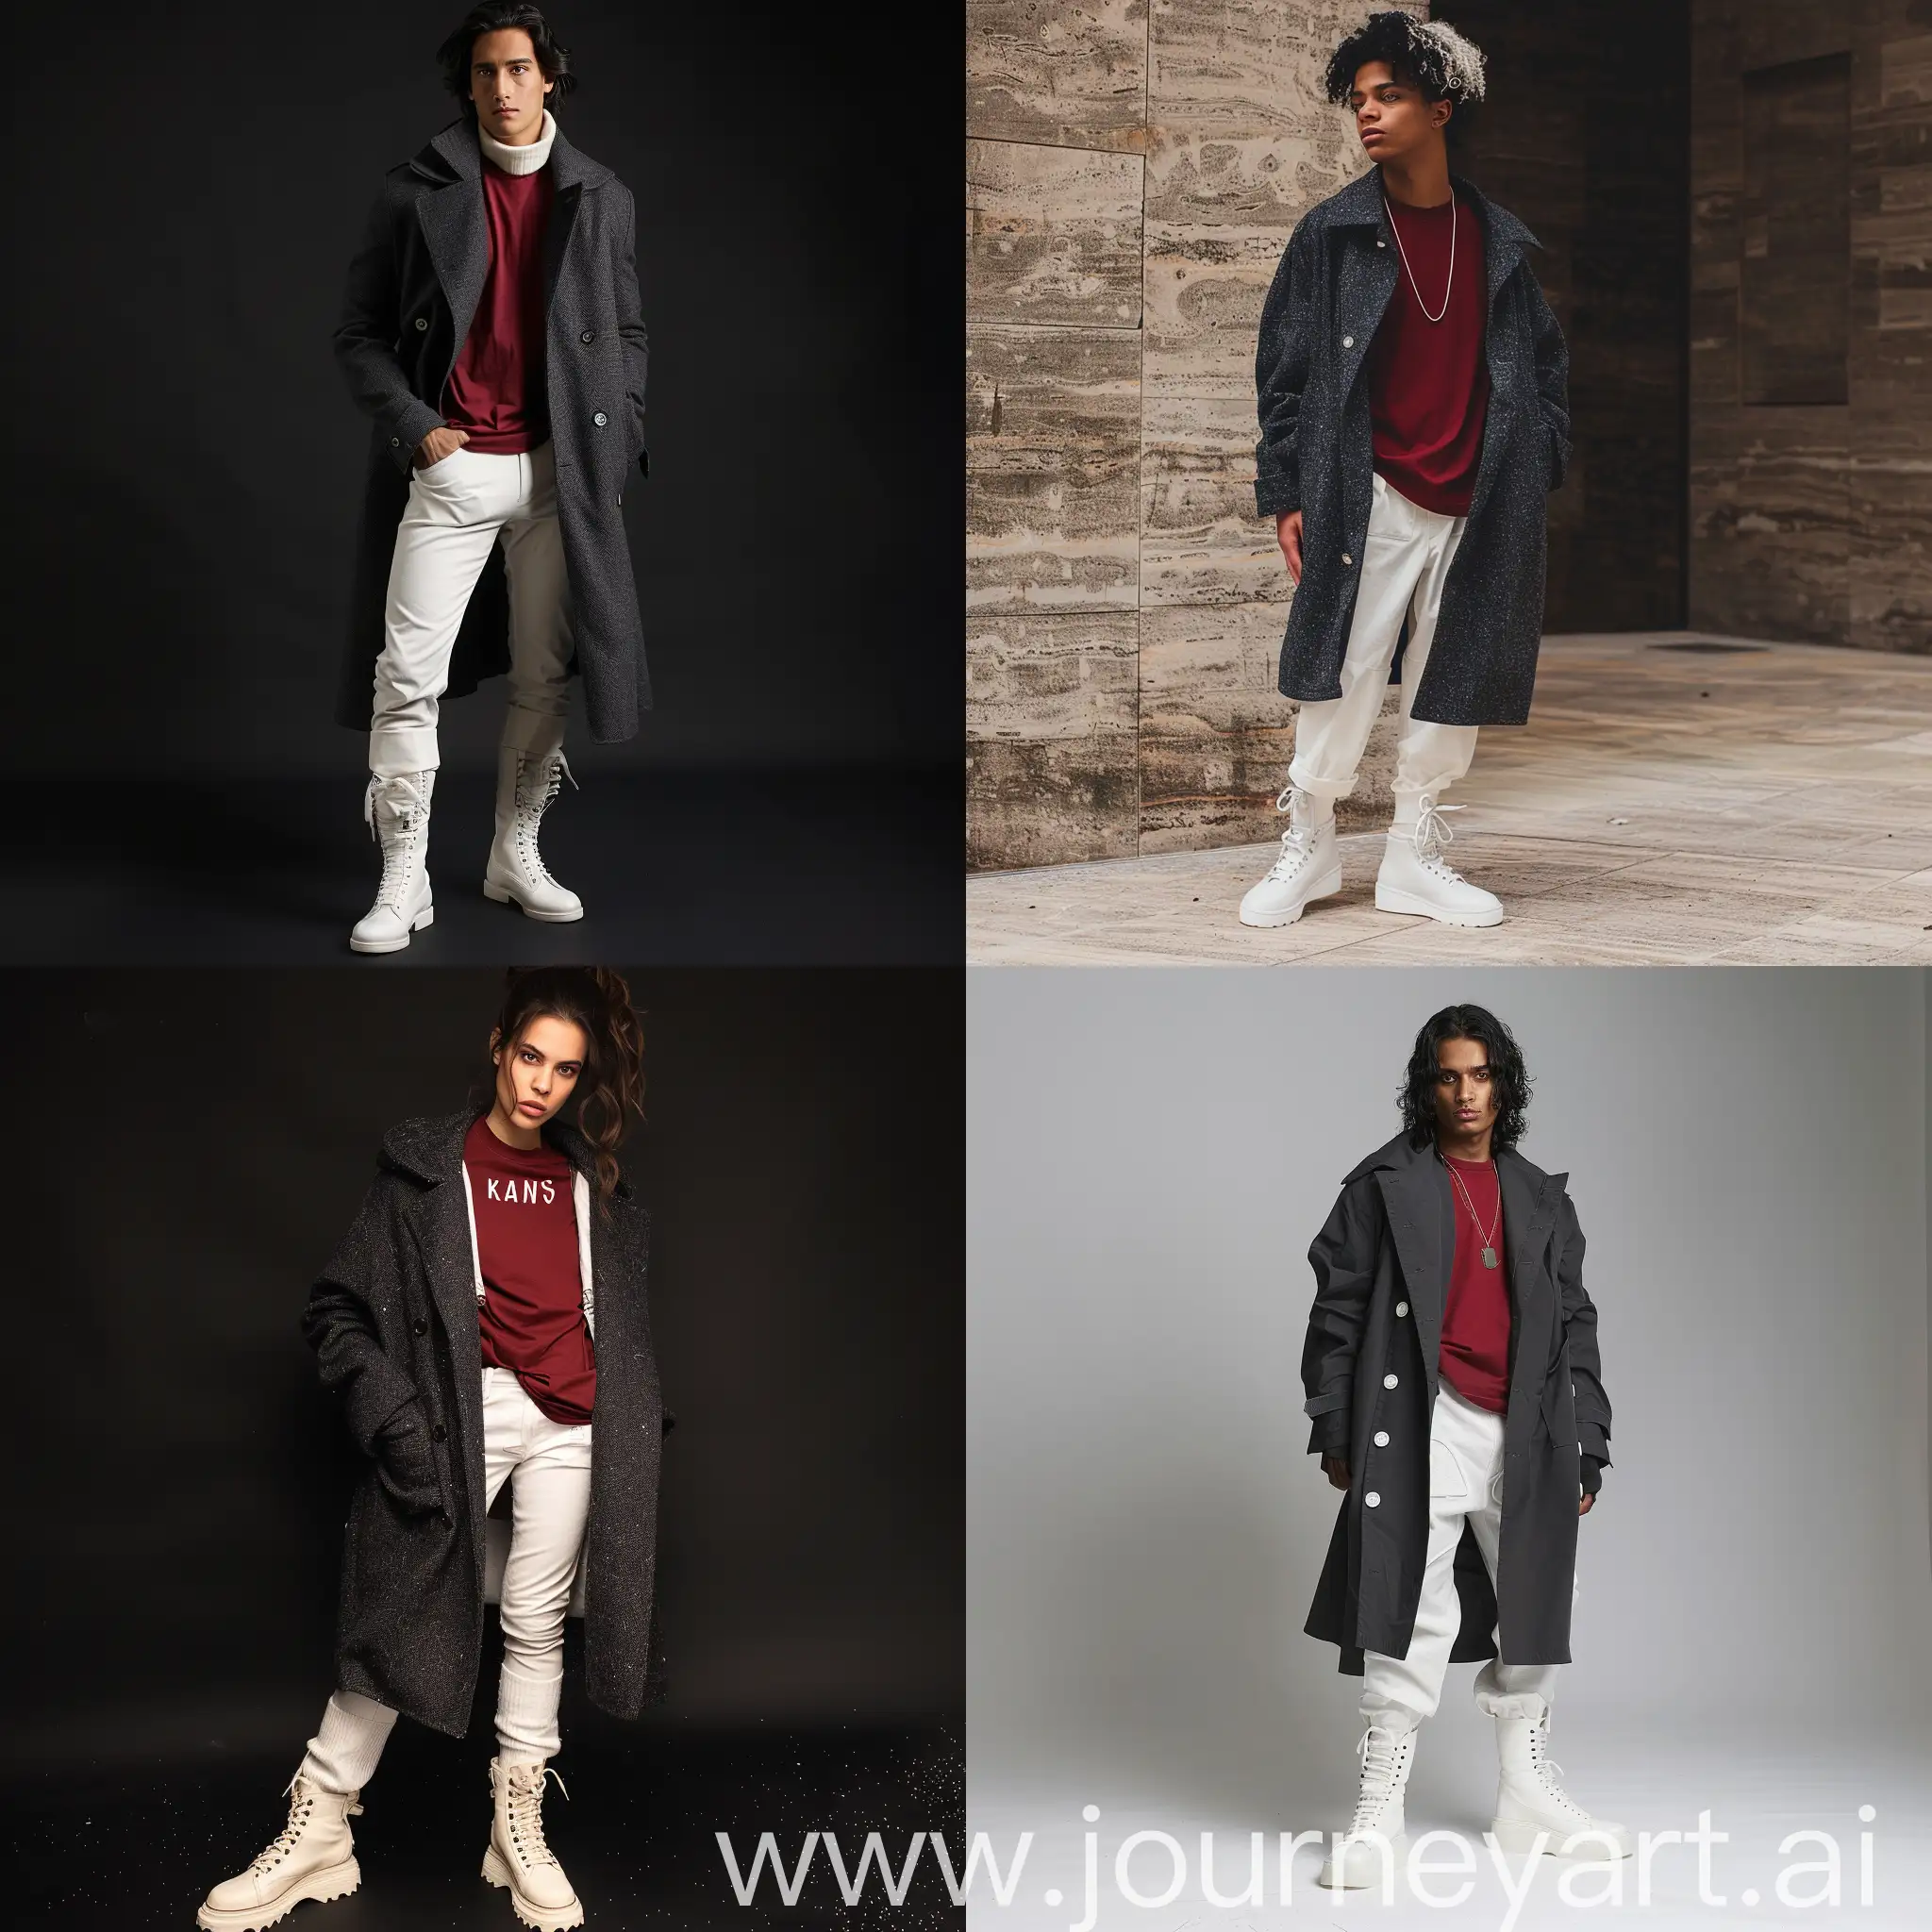 Stylish-Urban-Fashion-Unbuttoned-Dark-Gray-Coat-and-White-Boots